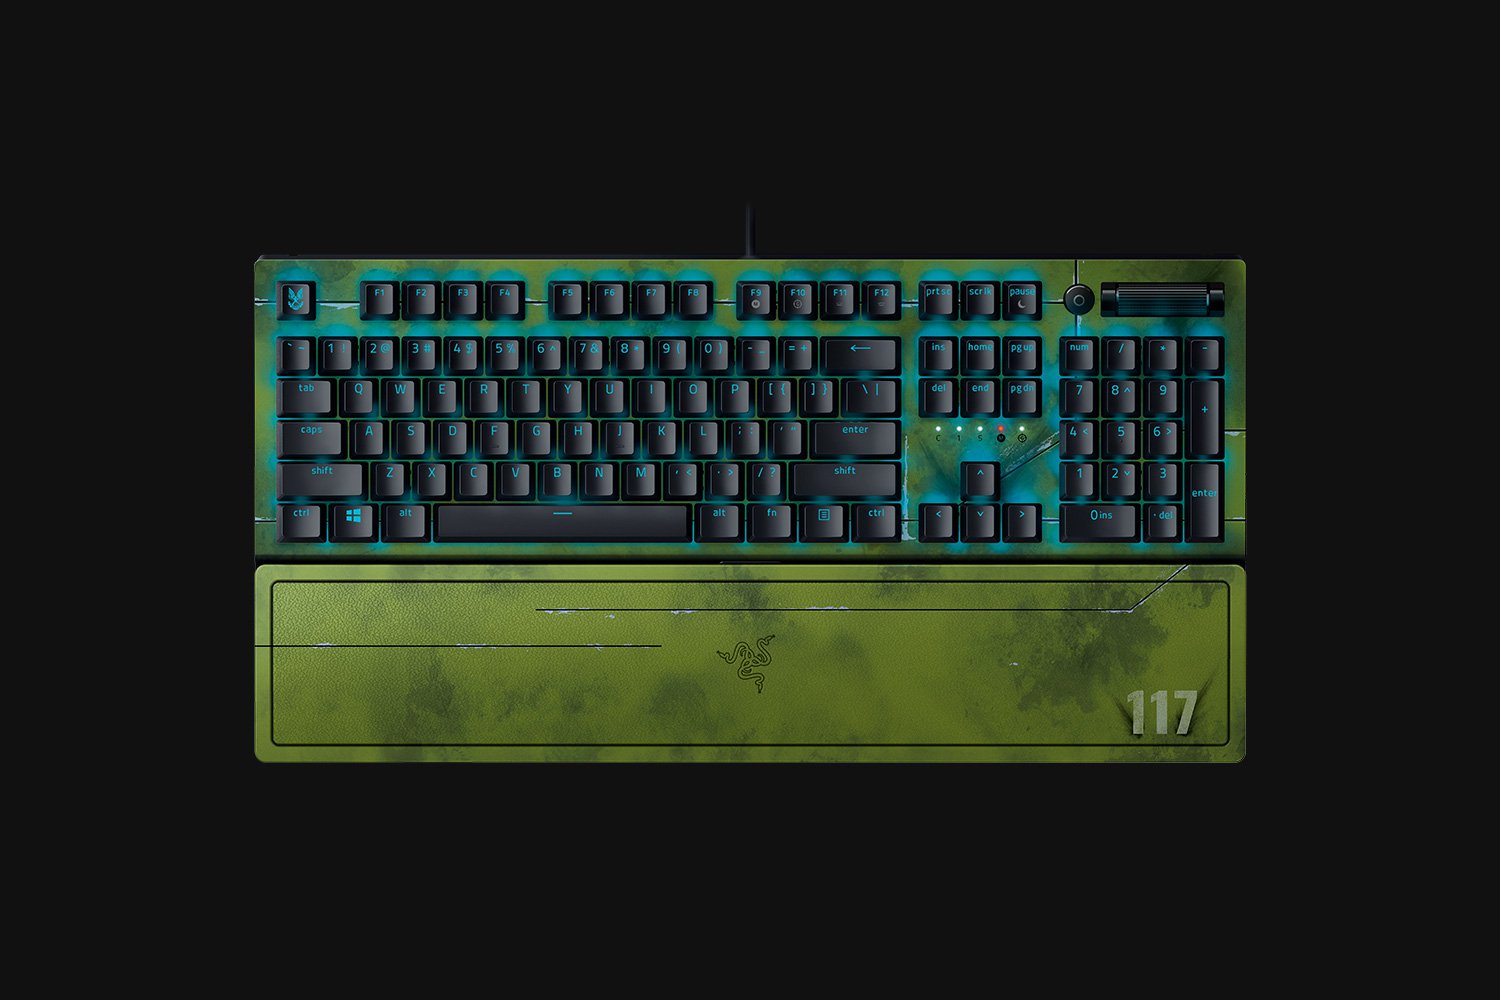 Razer BlackWidow V3 Mechanical Gaming Keyboard - Halo Infinite Edition